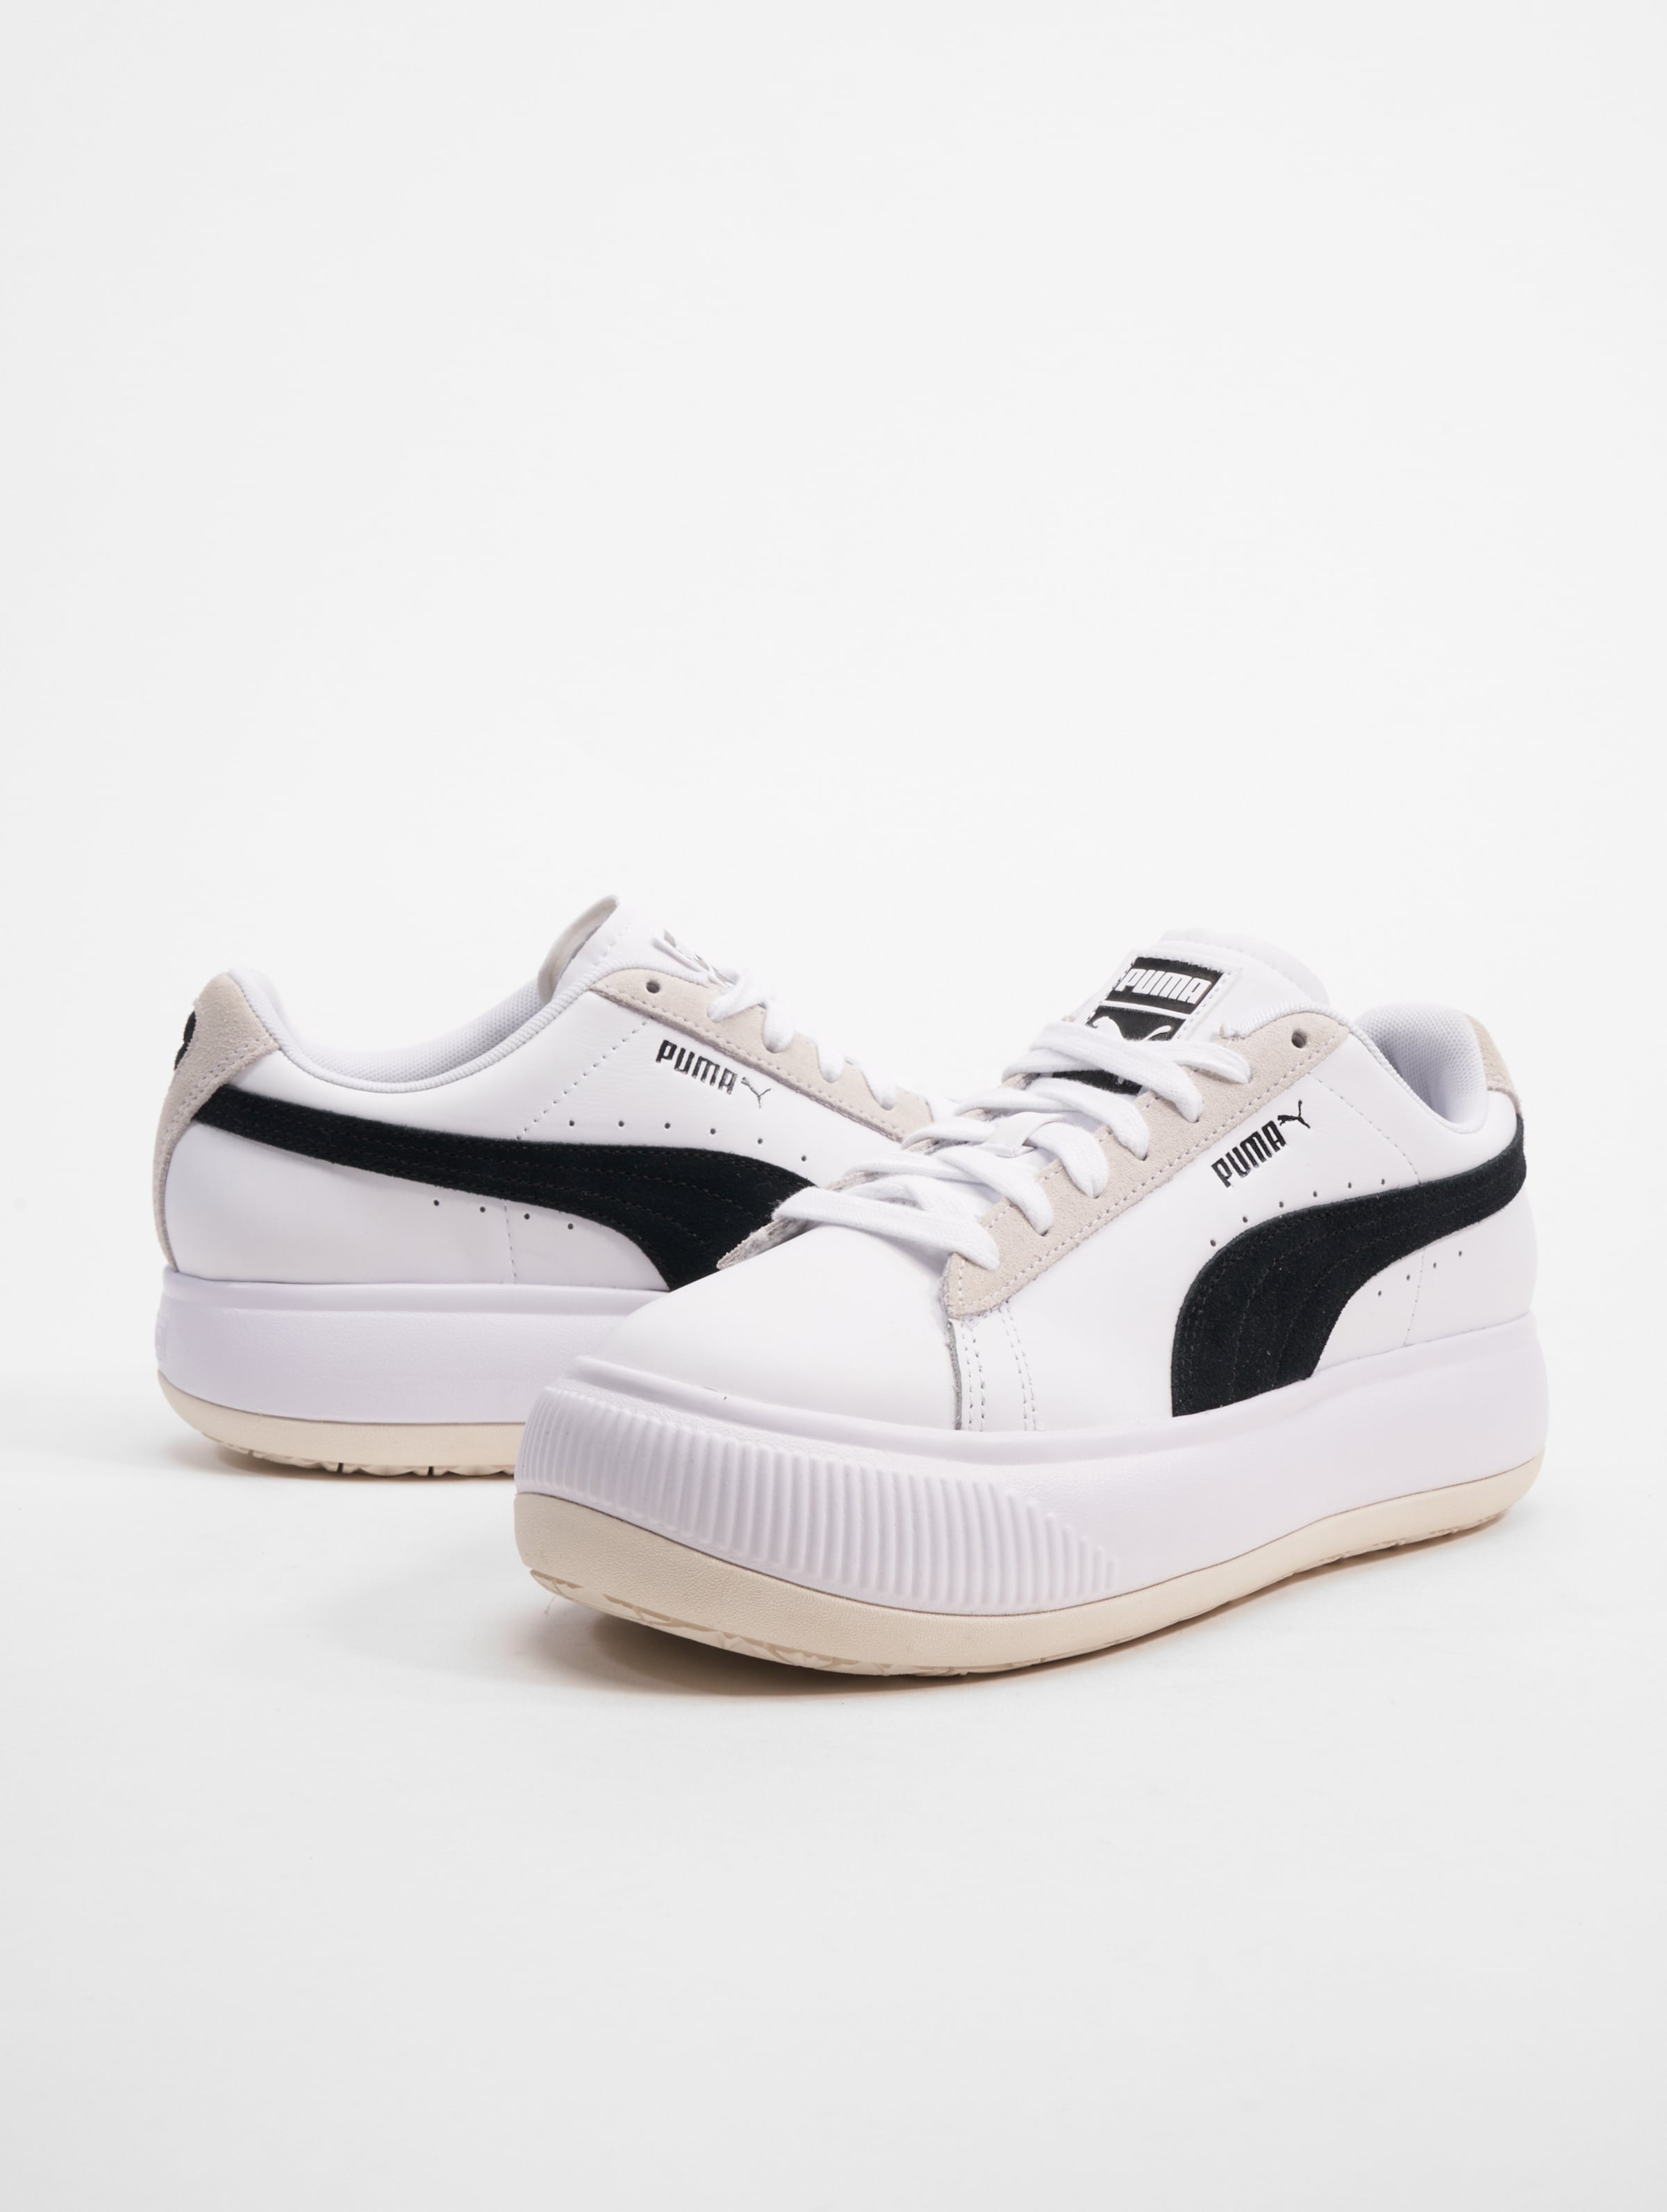 Puma Suede Mayu Mix Dames Sneakers - Puma White / Marshmallow / Puma Black - EU 38.5